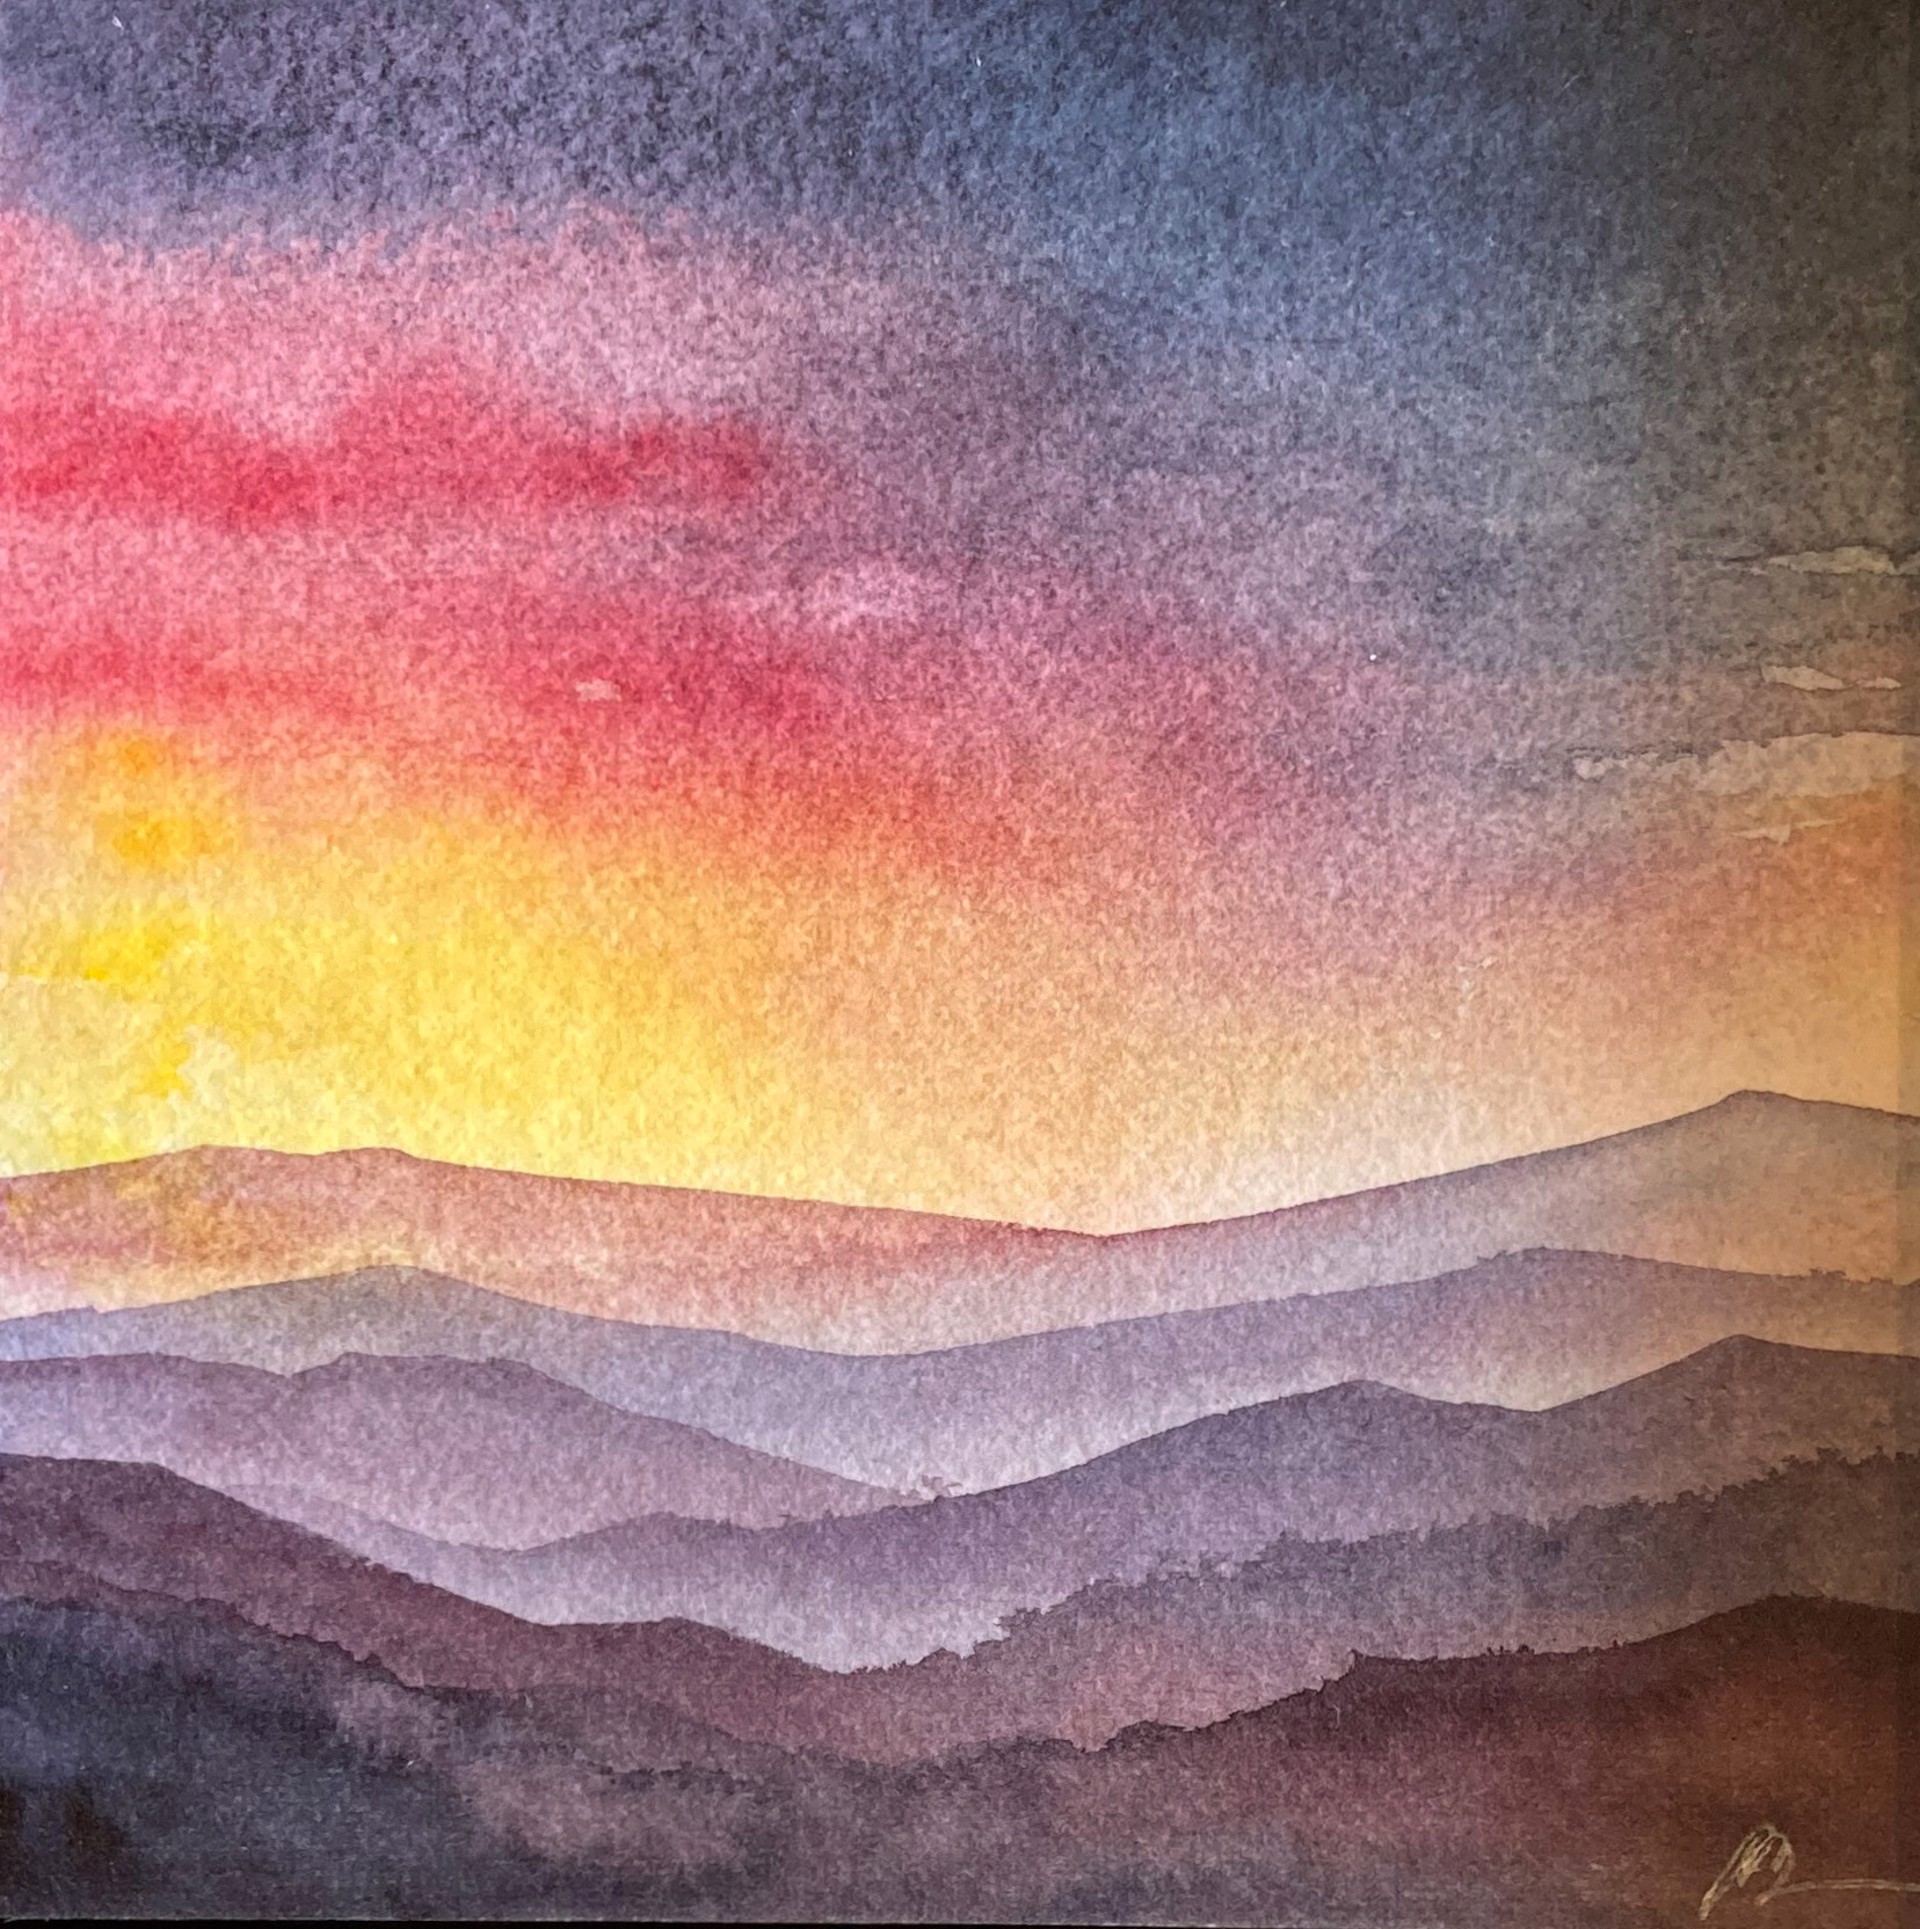 Sunrise # 1 by Bronwen McCormick